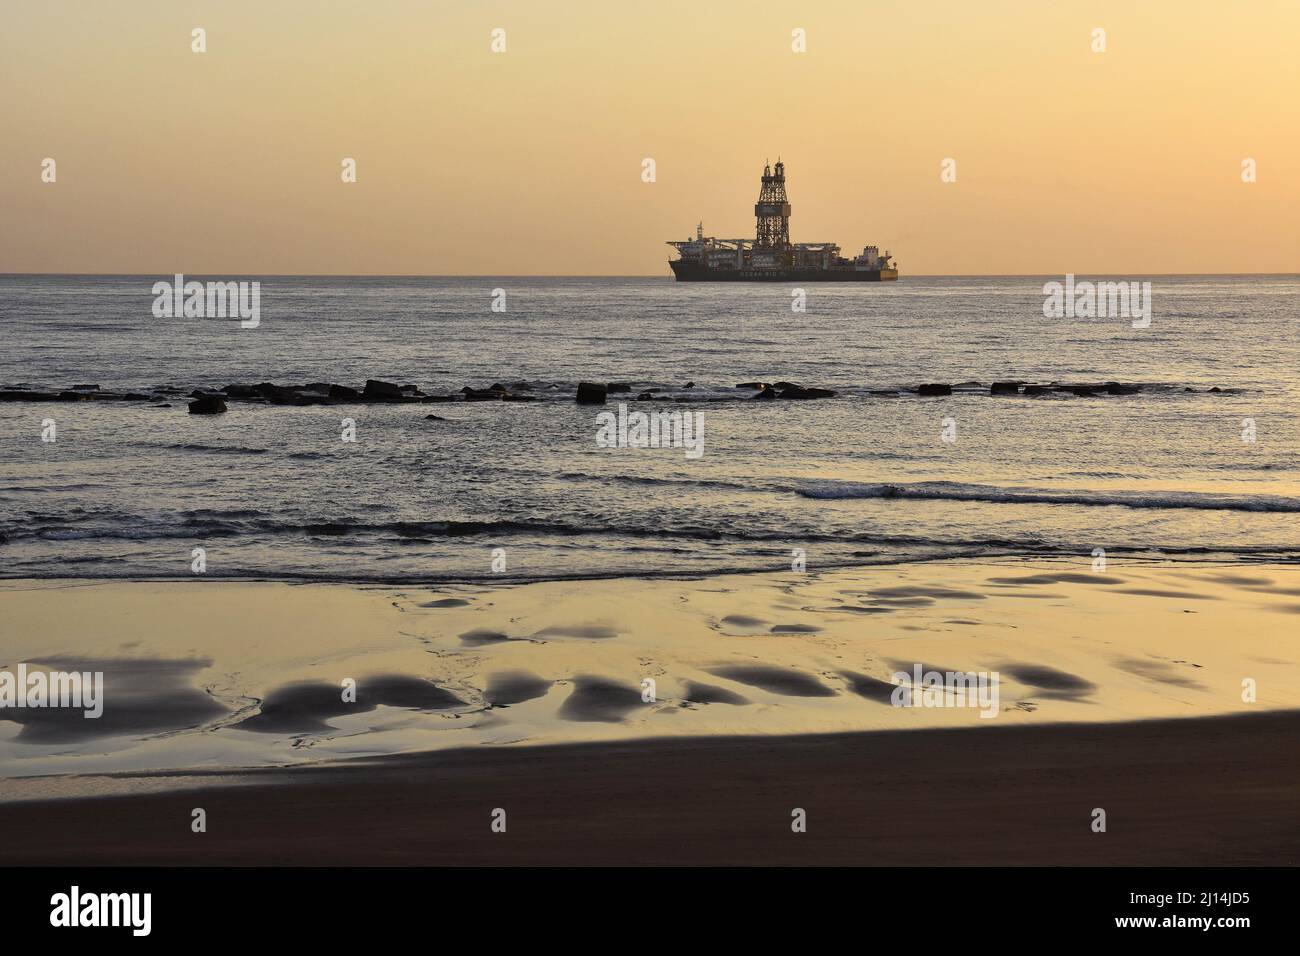 Drillship off the coast of Las Palmas in Gran Canaria Canary Islands Spain. Stock Photo